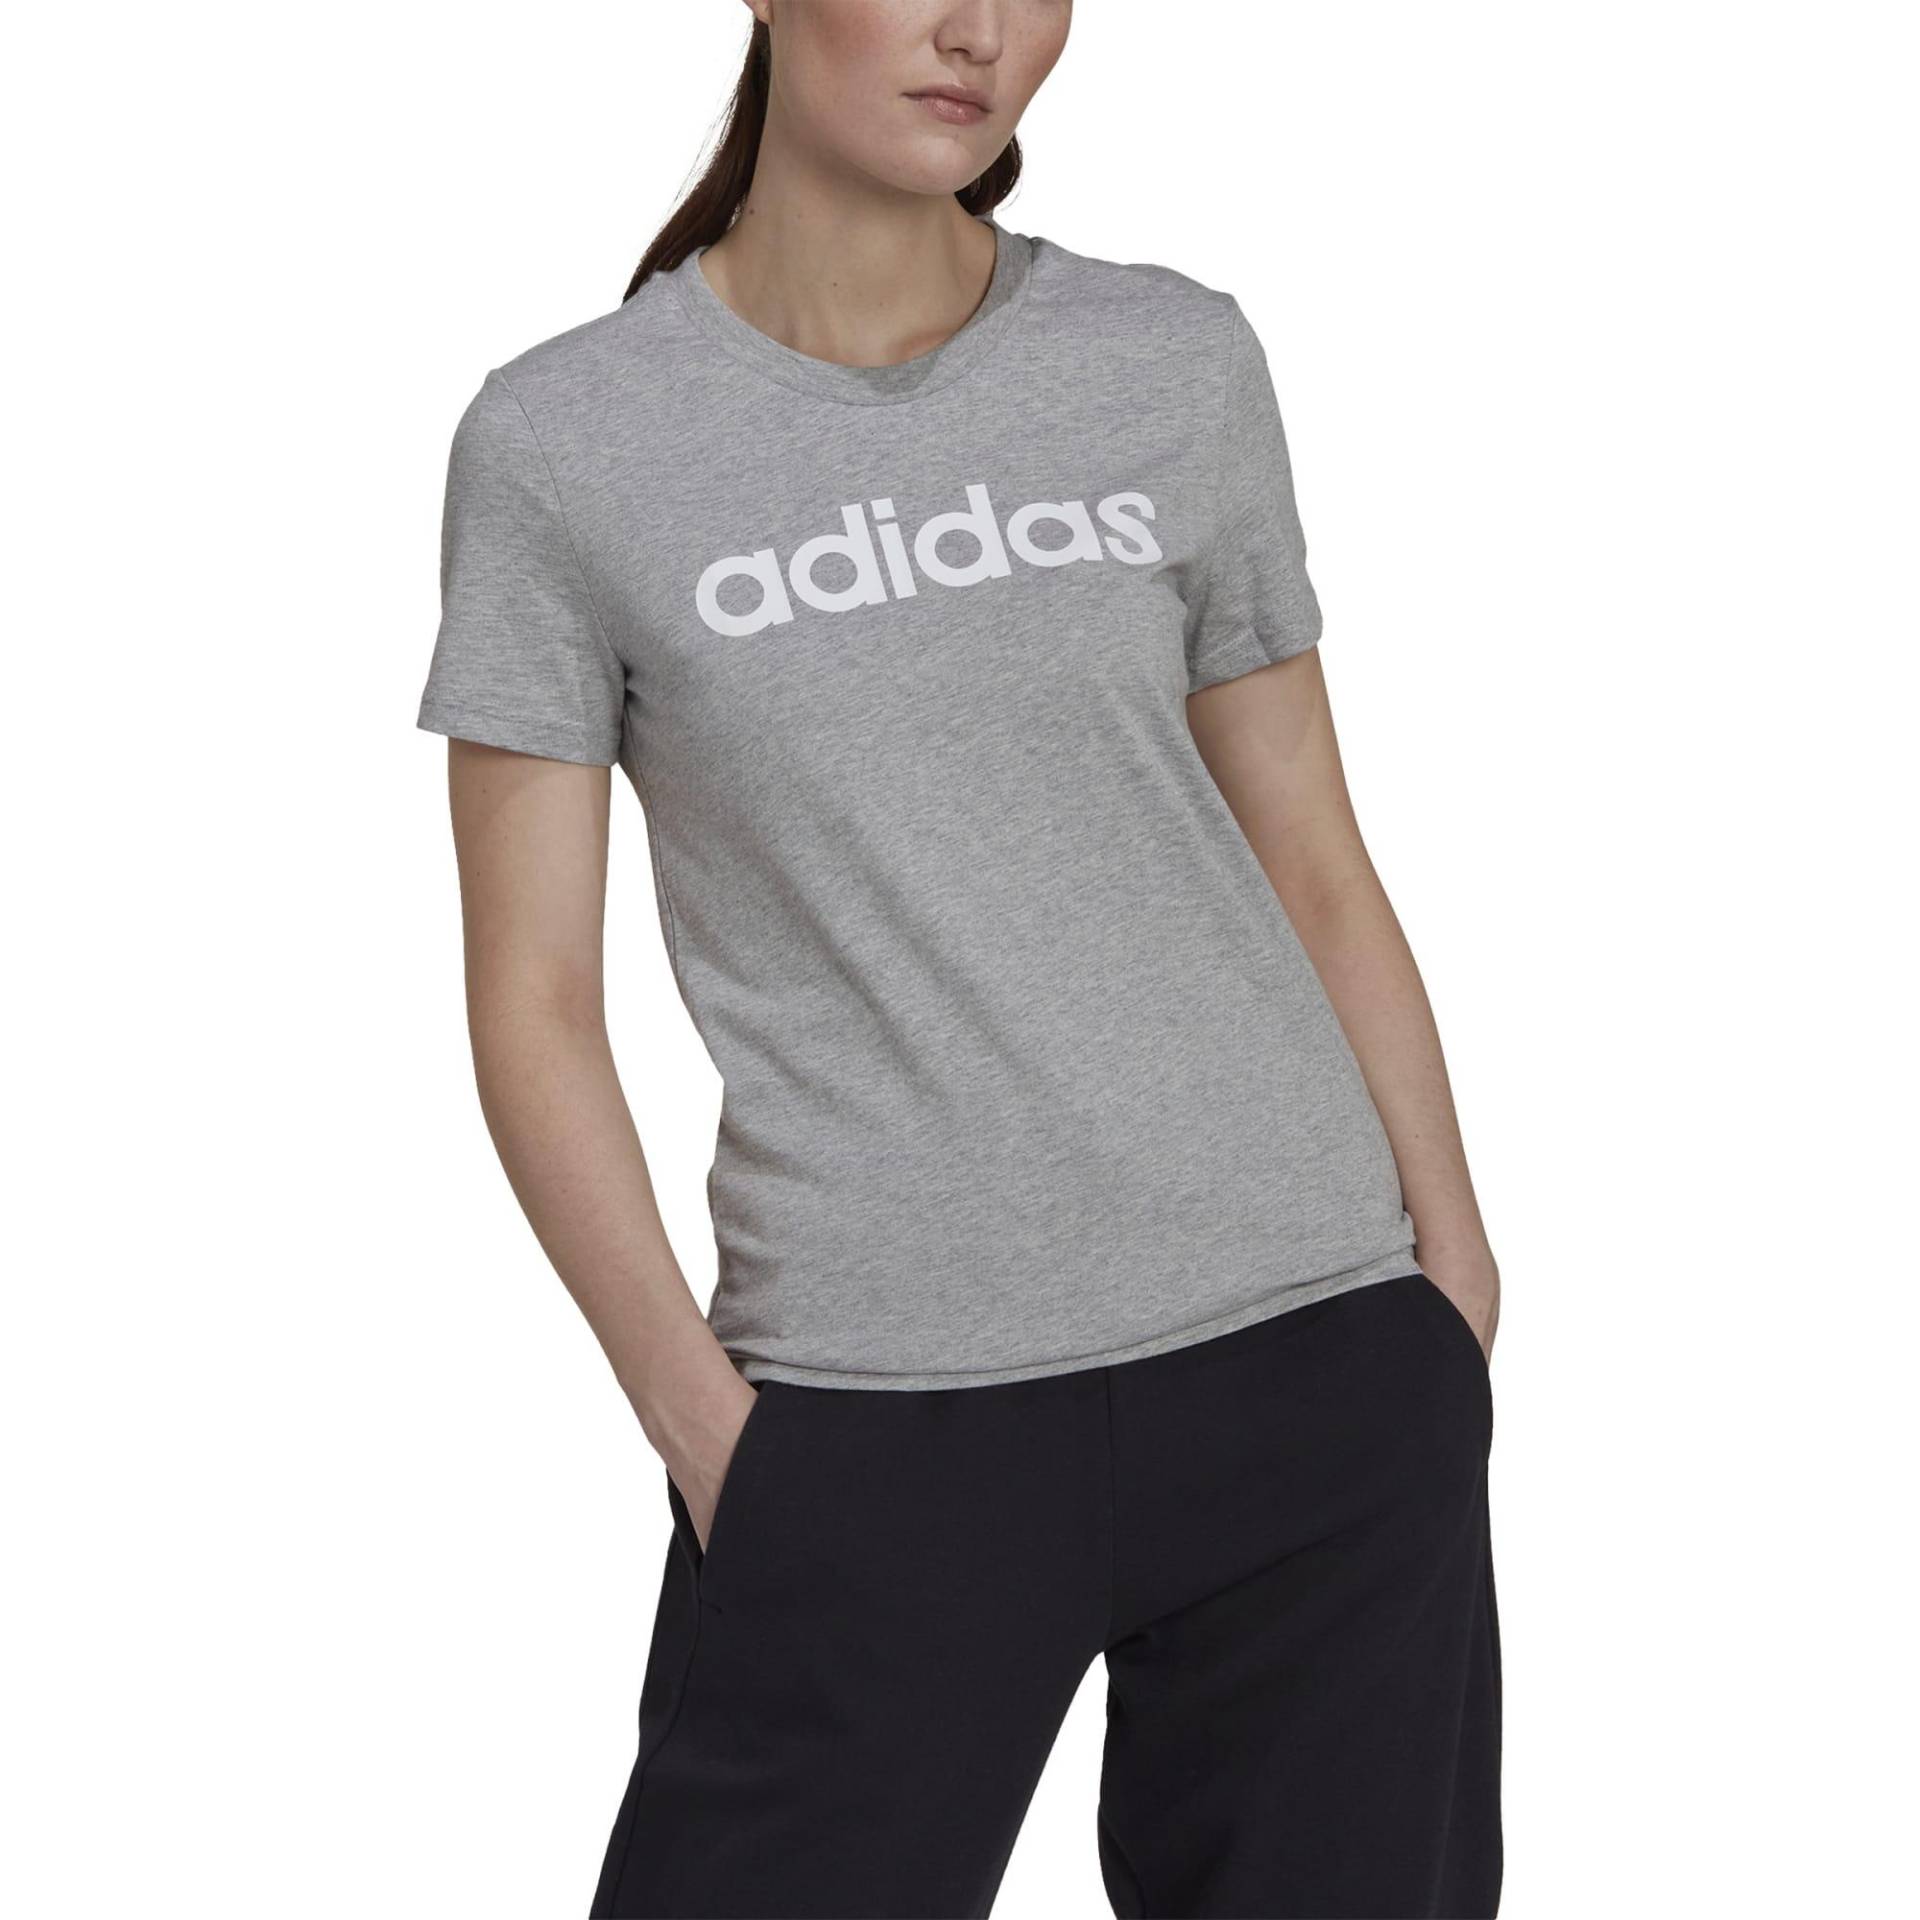 Adidas T-Shirt Damen - slim grau von Adidas